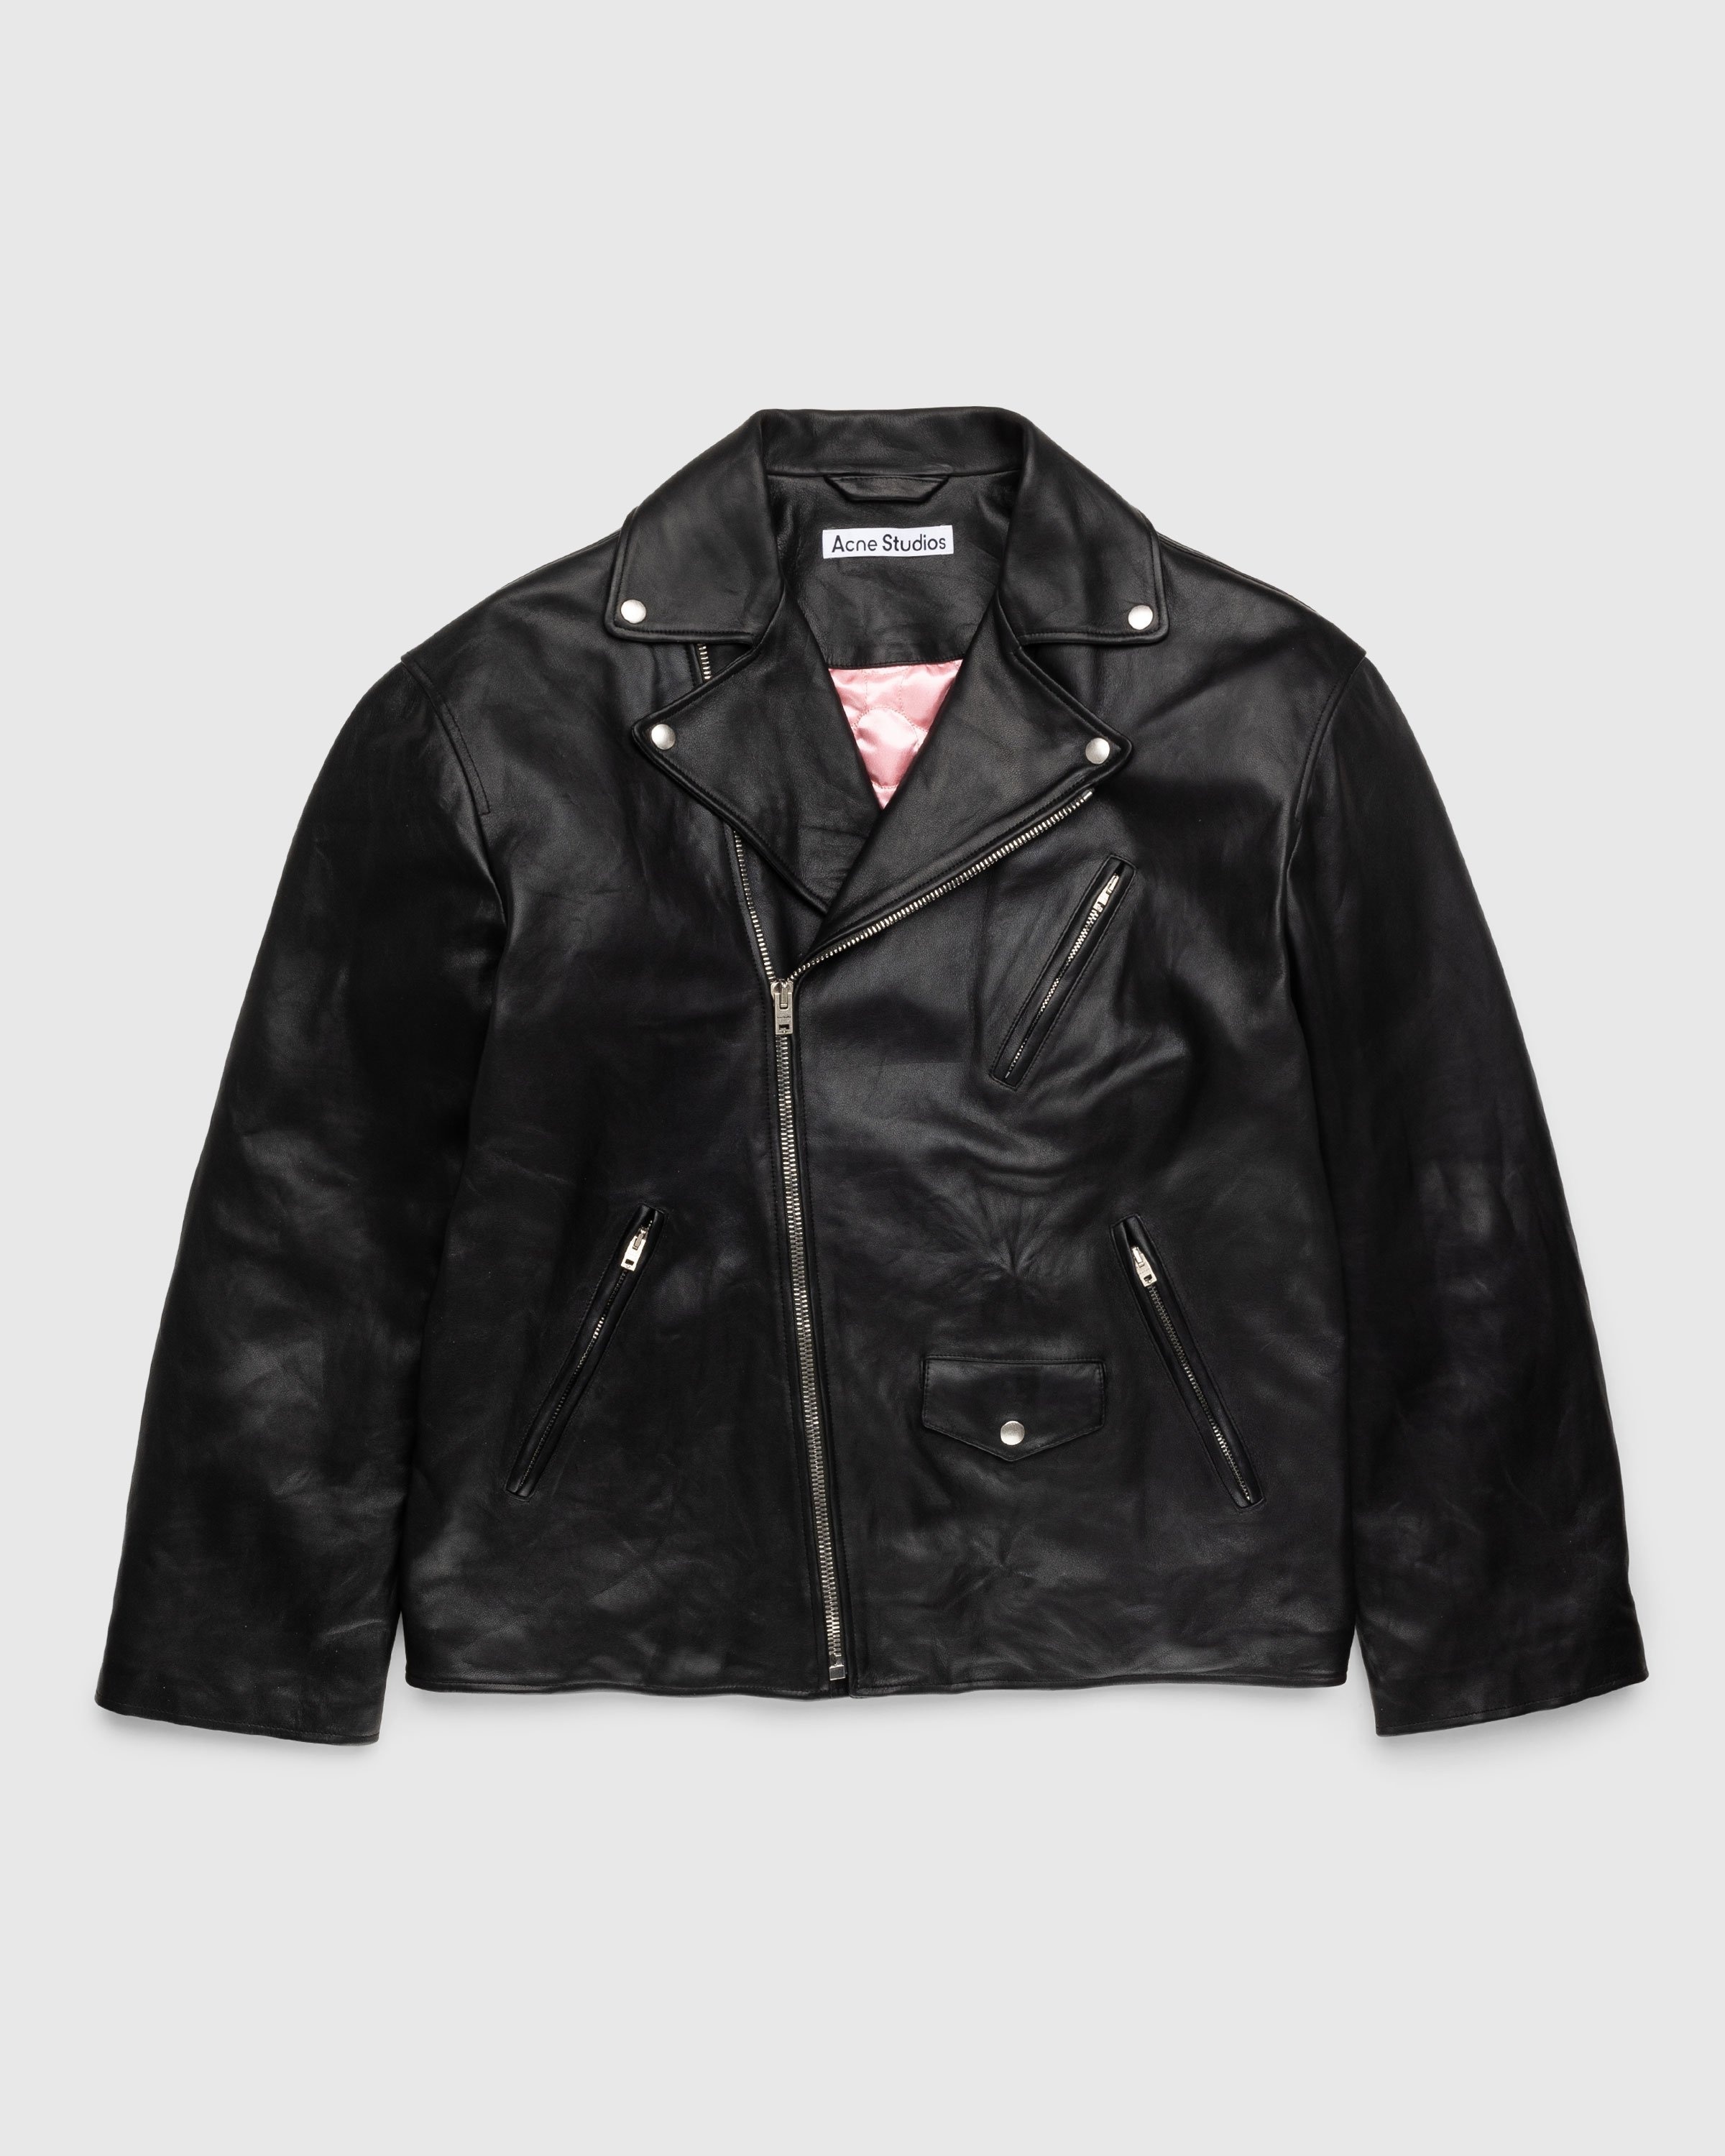 Acne Studios – Distressed Leather Jacket Black - Leather Jackets - Black - Image 1